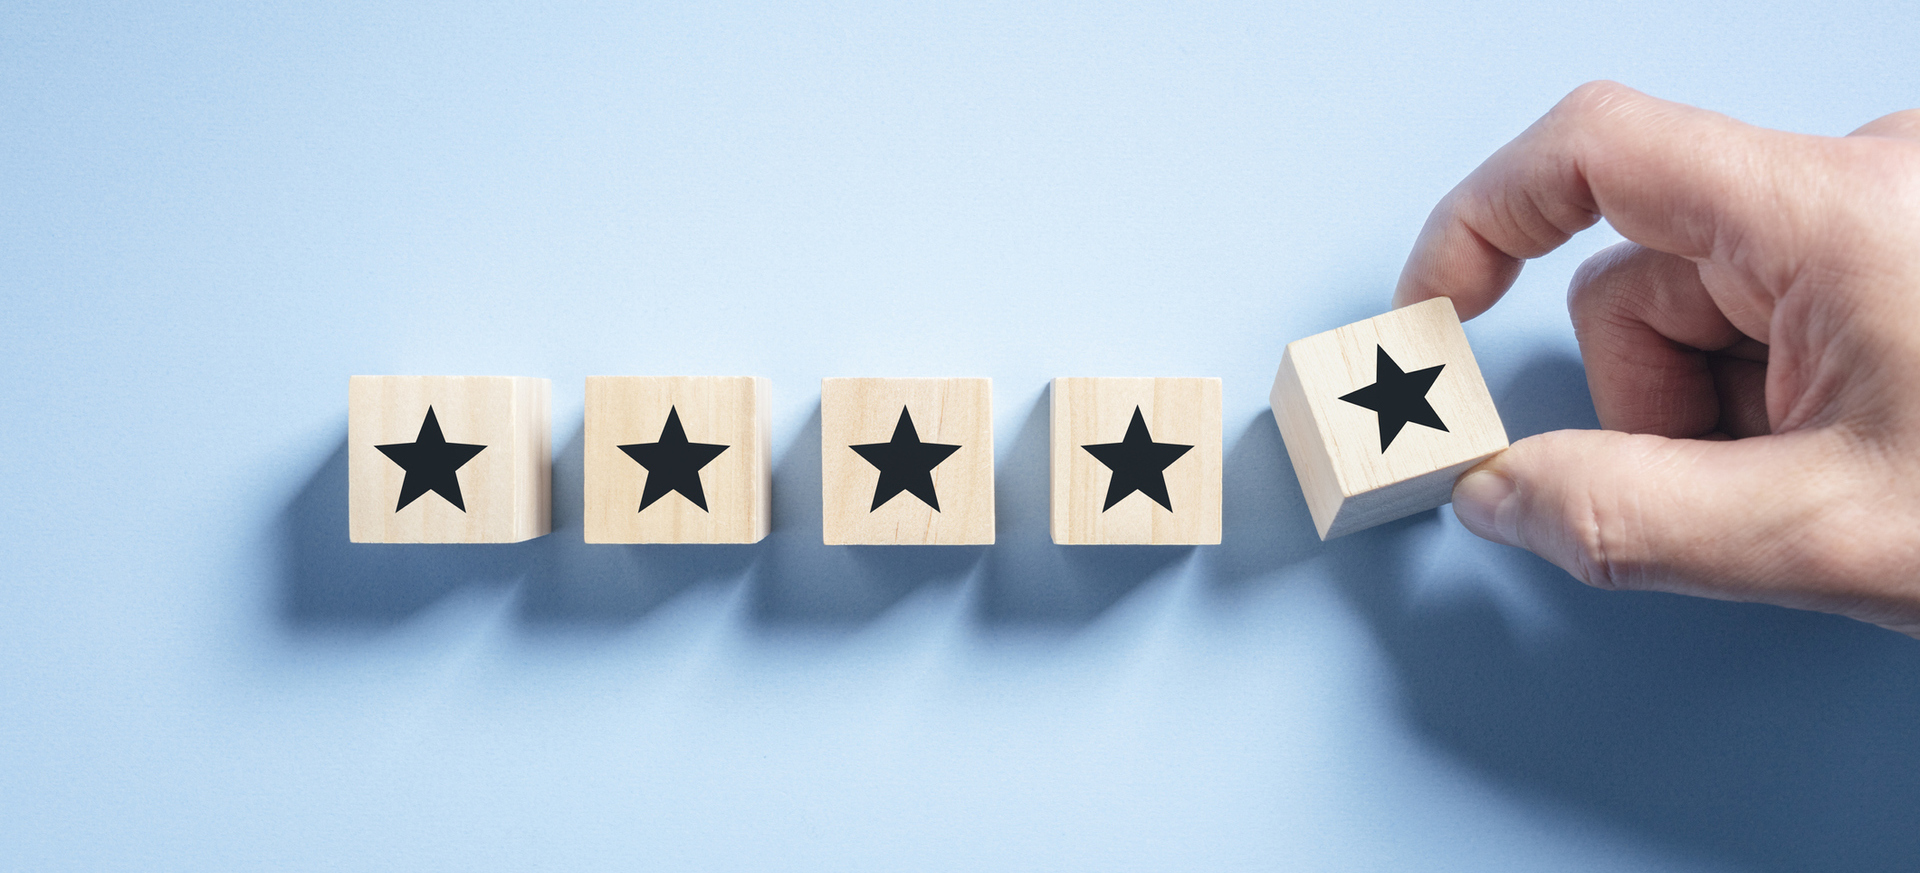 Customer experience feedback rate 5 star rating wood blocks